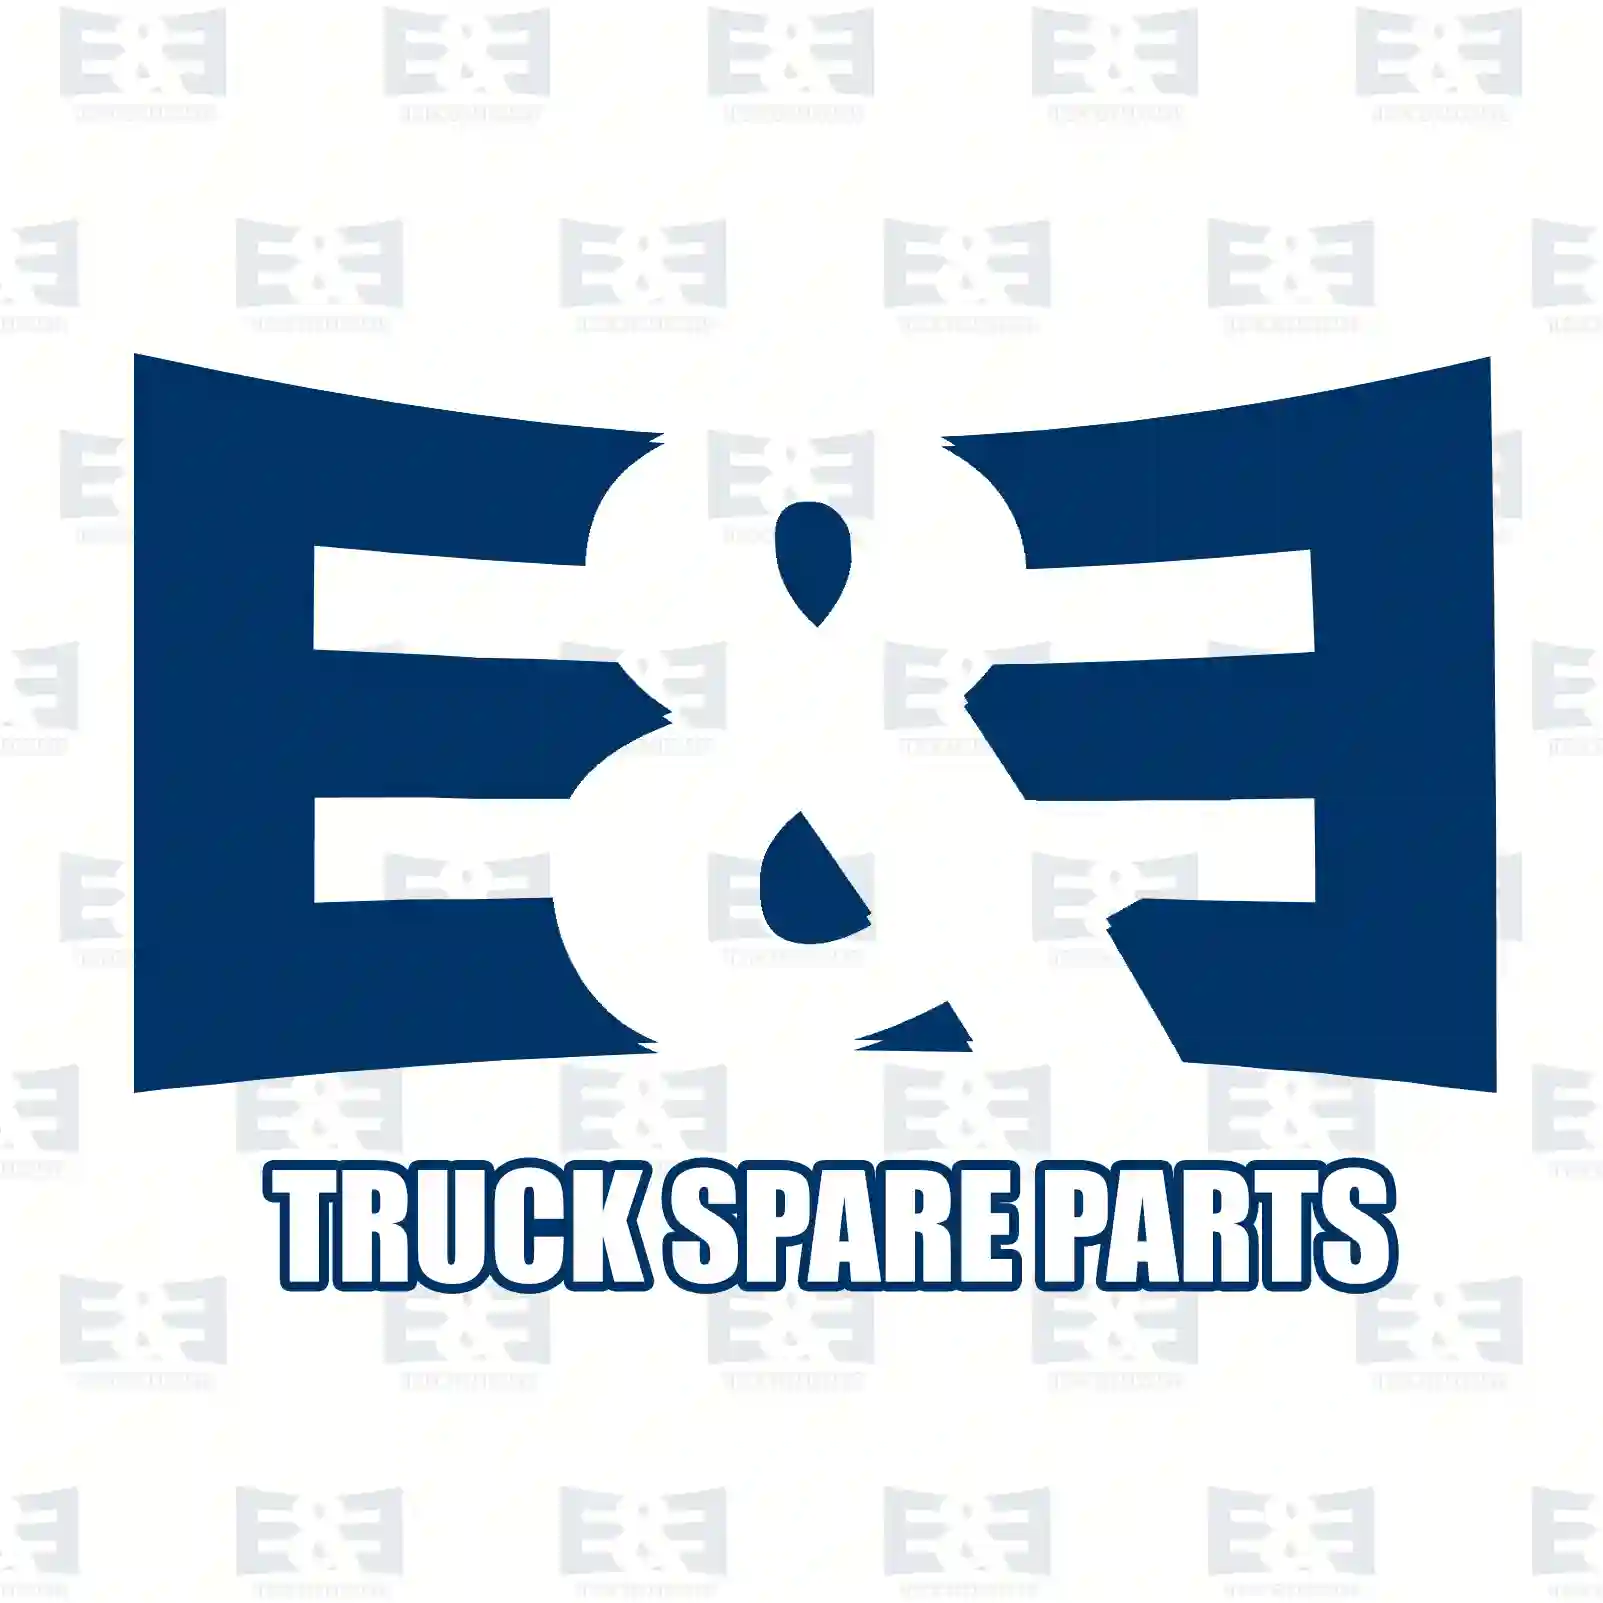 Drum brake lining kit, axle kit - oversize, 2E2293002, 5001860030S1, 5001860031, ||  2E2293002 E&E Truck Spare Parts | Truck Spare Parts, Auotomotive Spare Parts Drum brake lining kit, axle kit - oversize, 2E2293002, 5001860030S1, 5001860031, ||  2E2293002 E&E Truck Spare Parts | Truck Spare Parts, Auotomotive Spare Parts